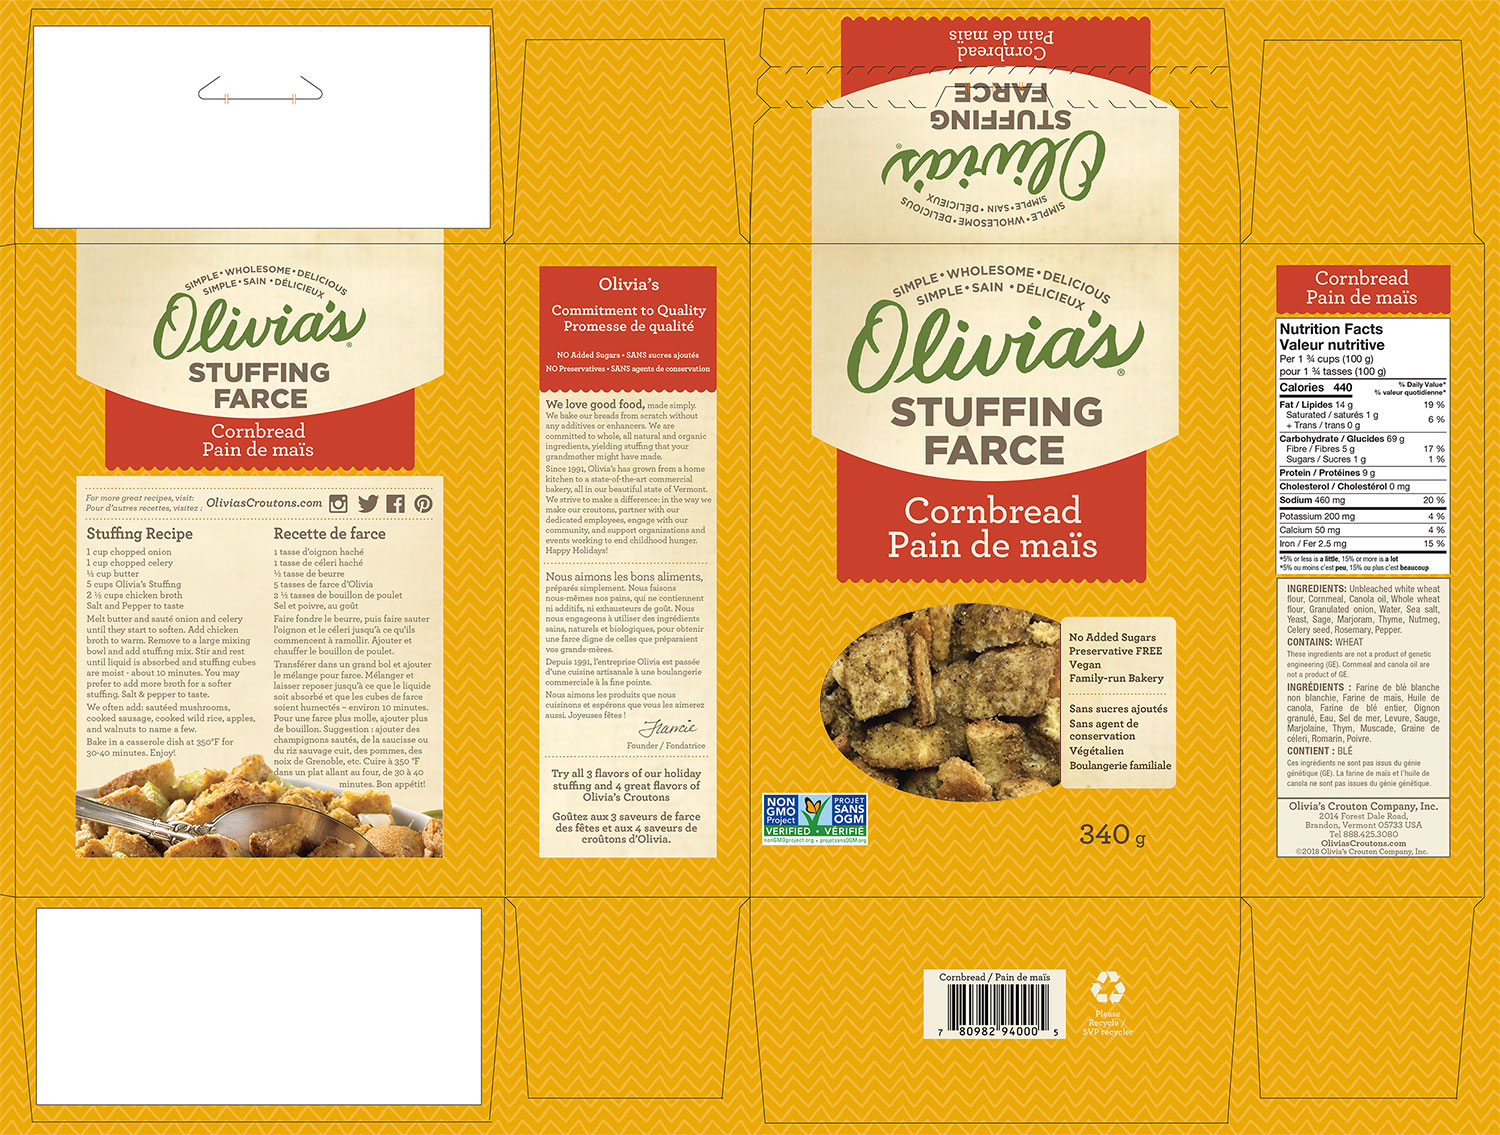 Bilingual Canadian Food Packaging